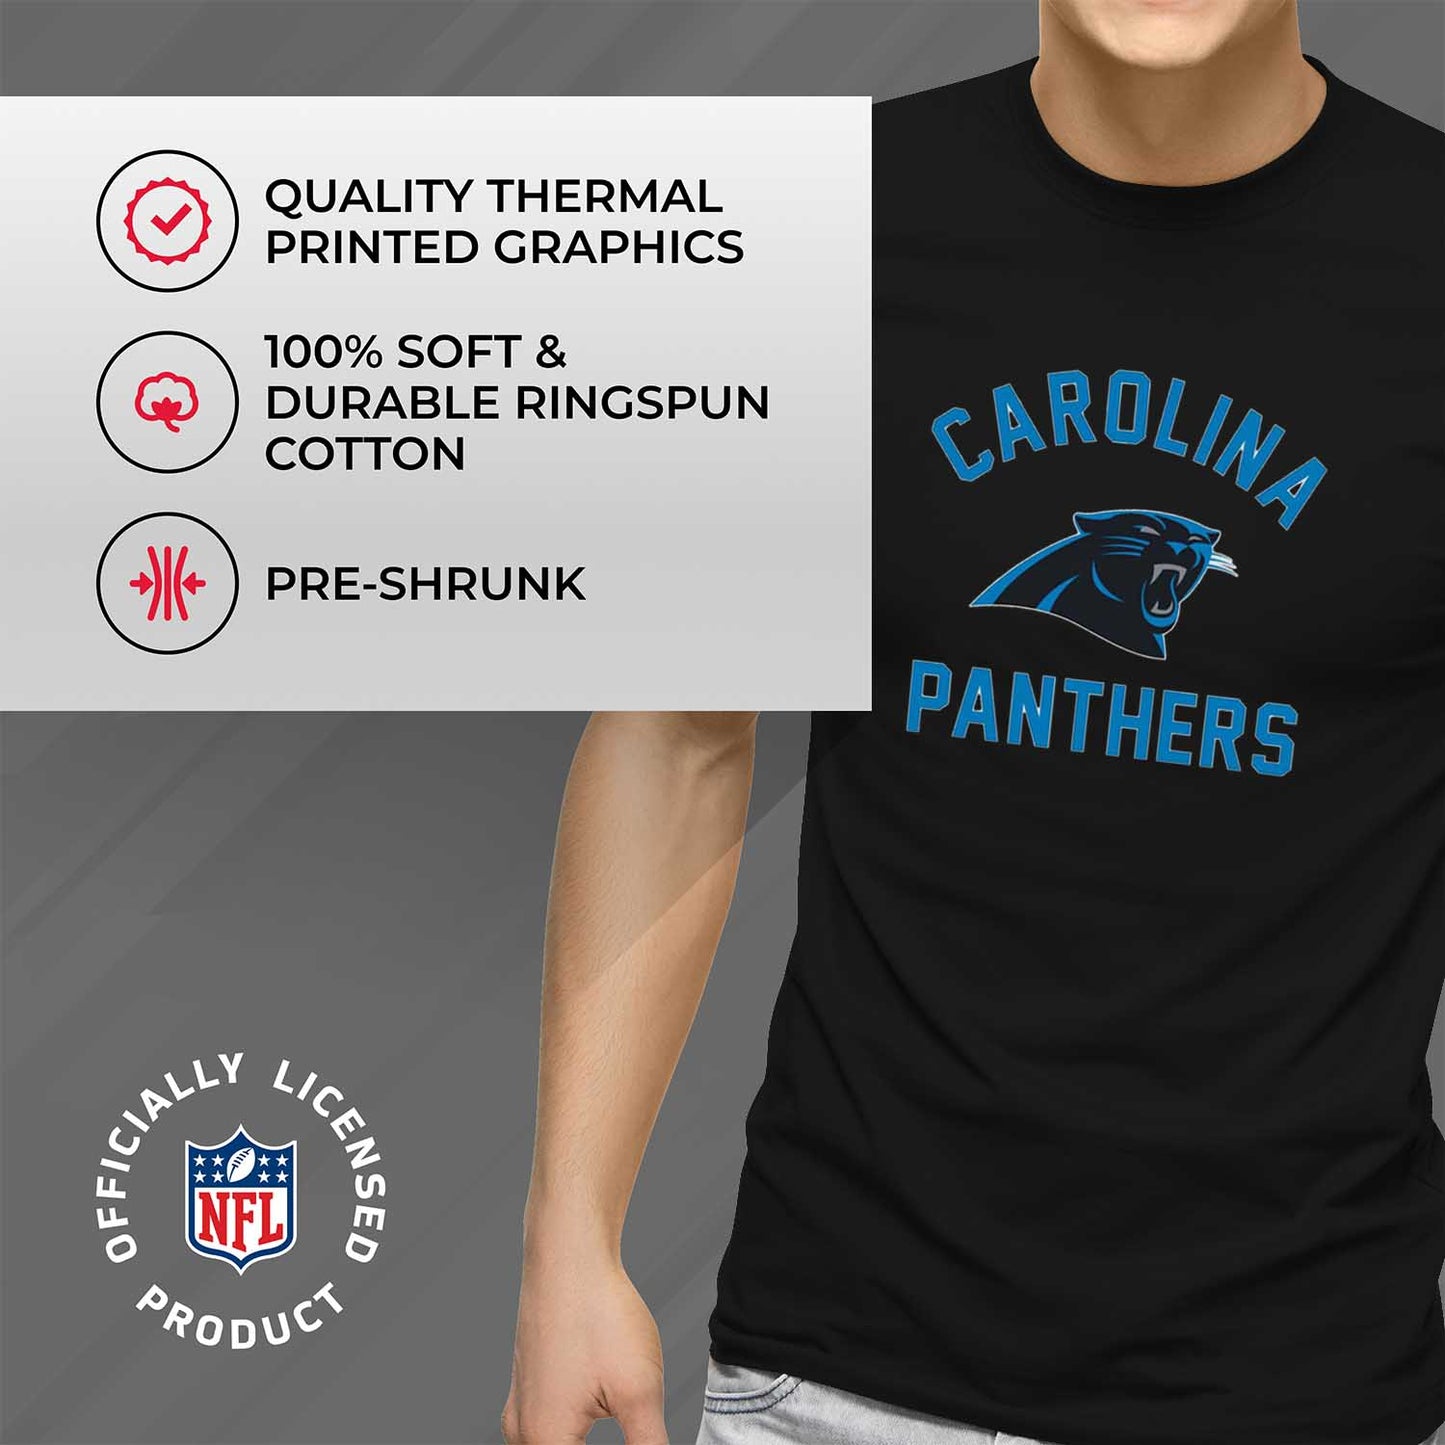 Carolina Panthers NFL Adult Gameday T-Shirt - Black